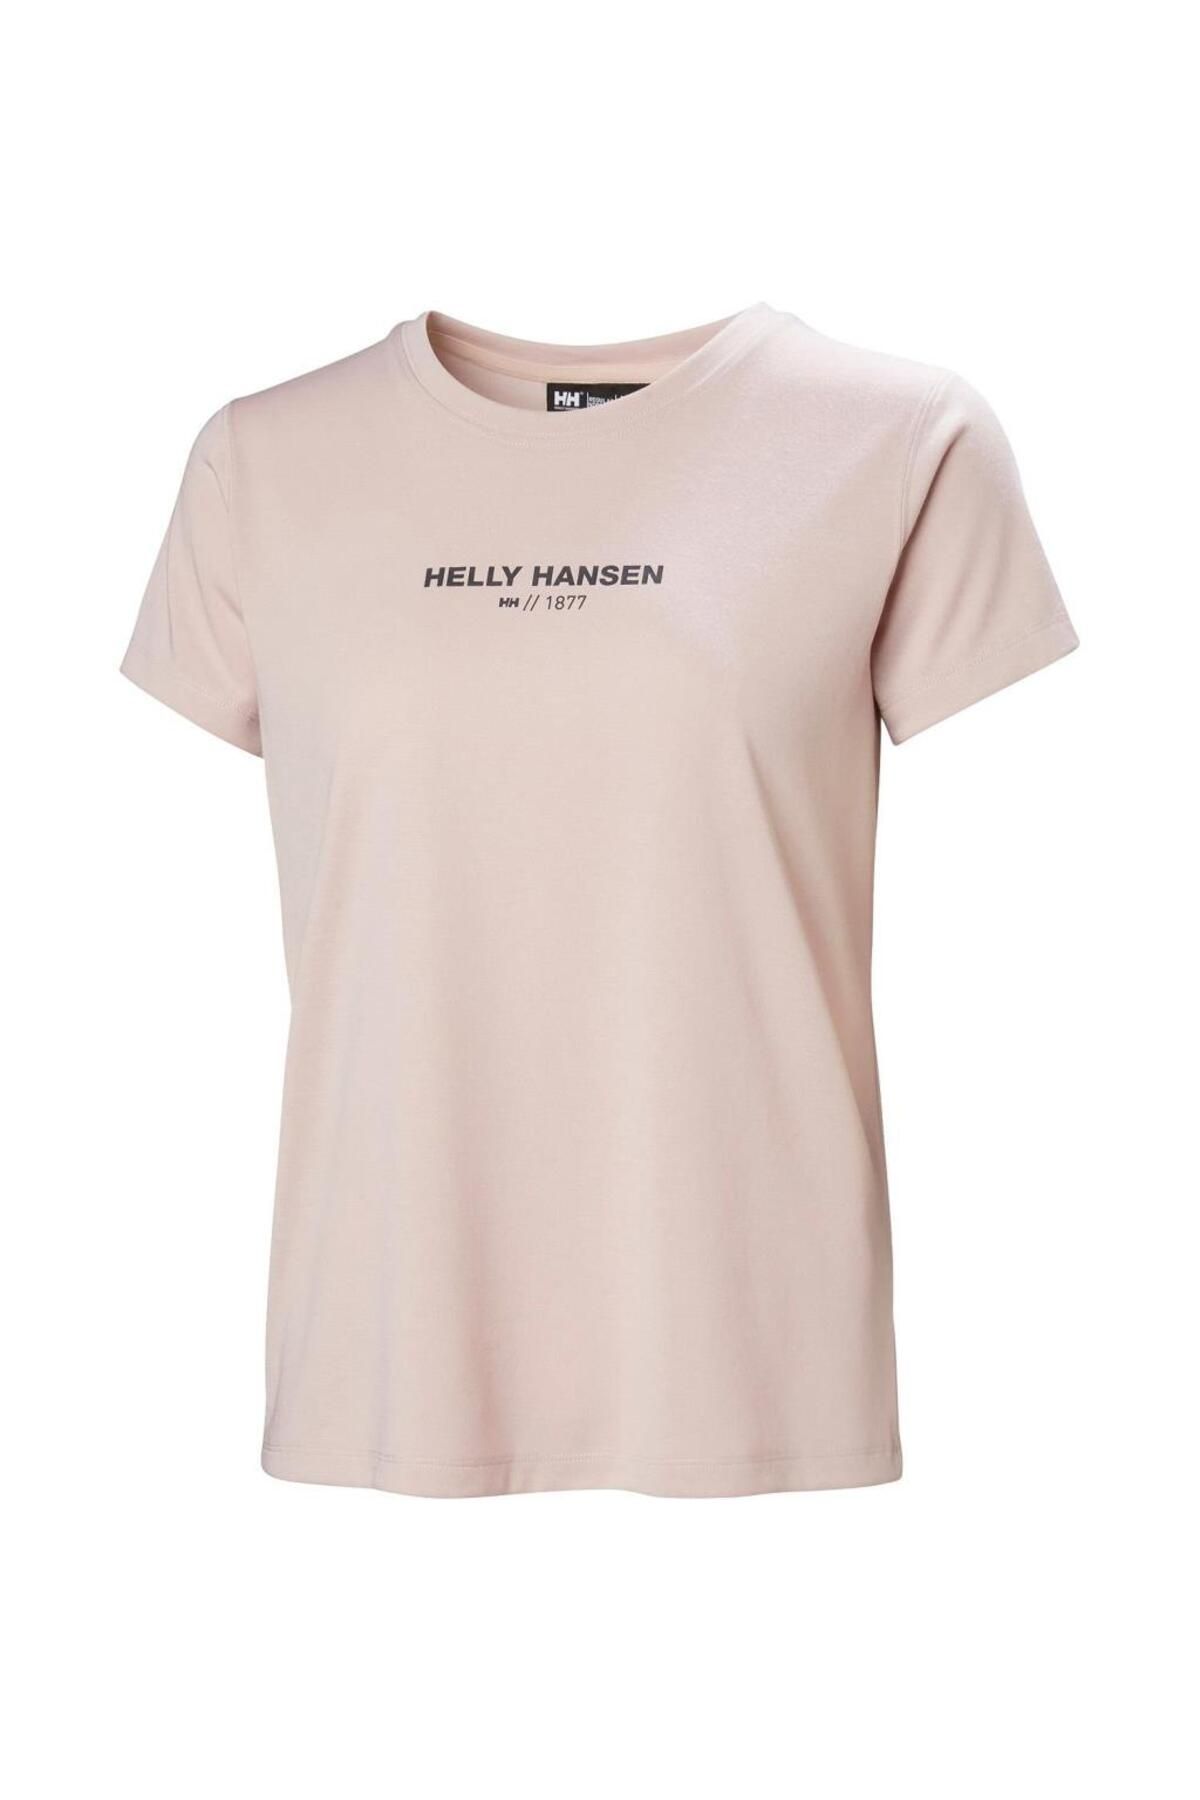 Helly Hansen Allure Kadın T-Shirt